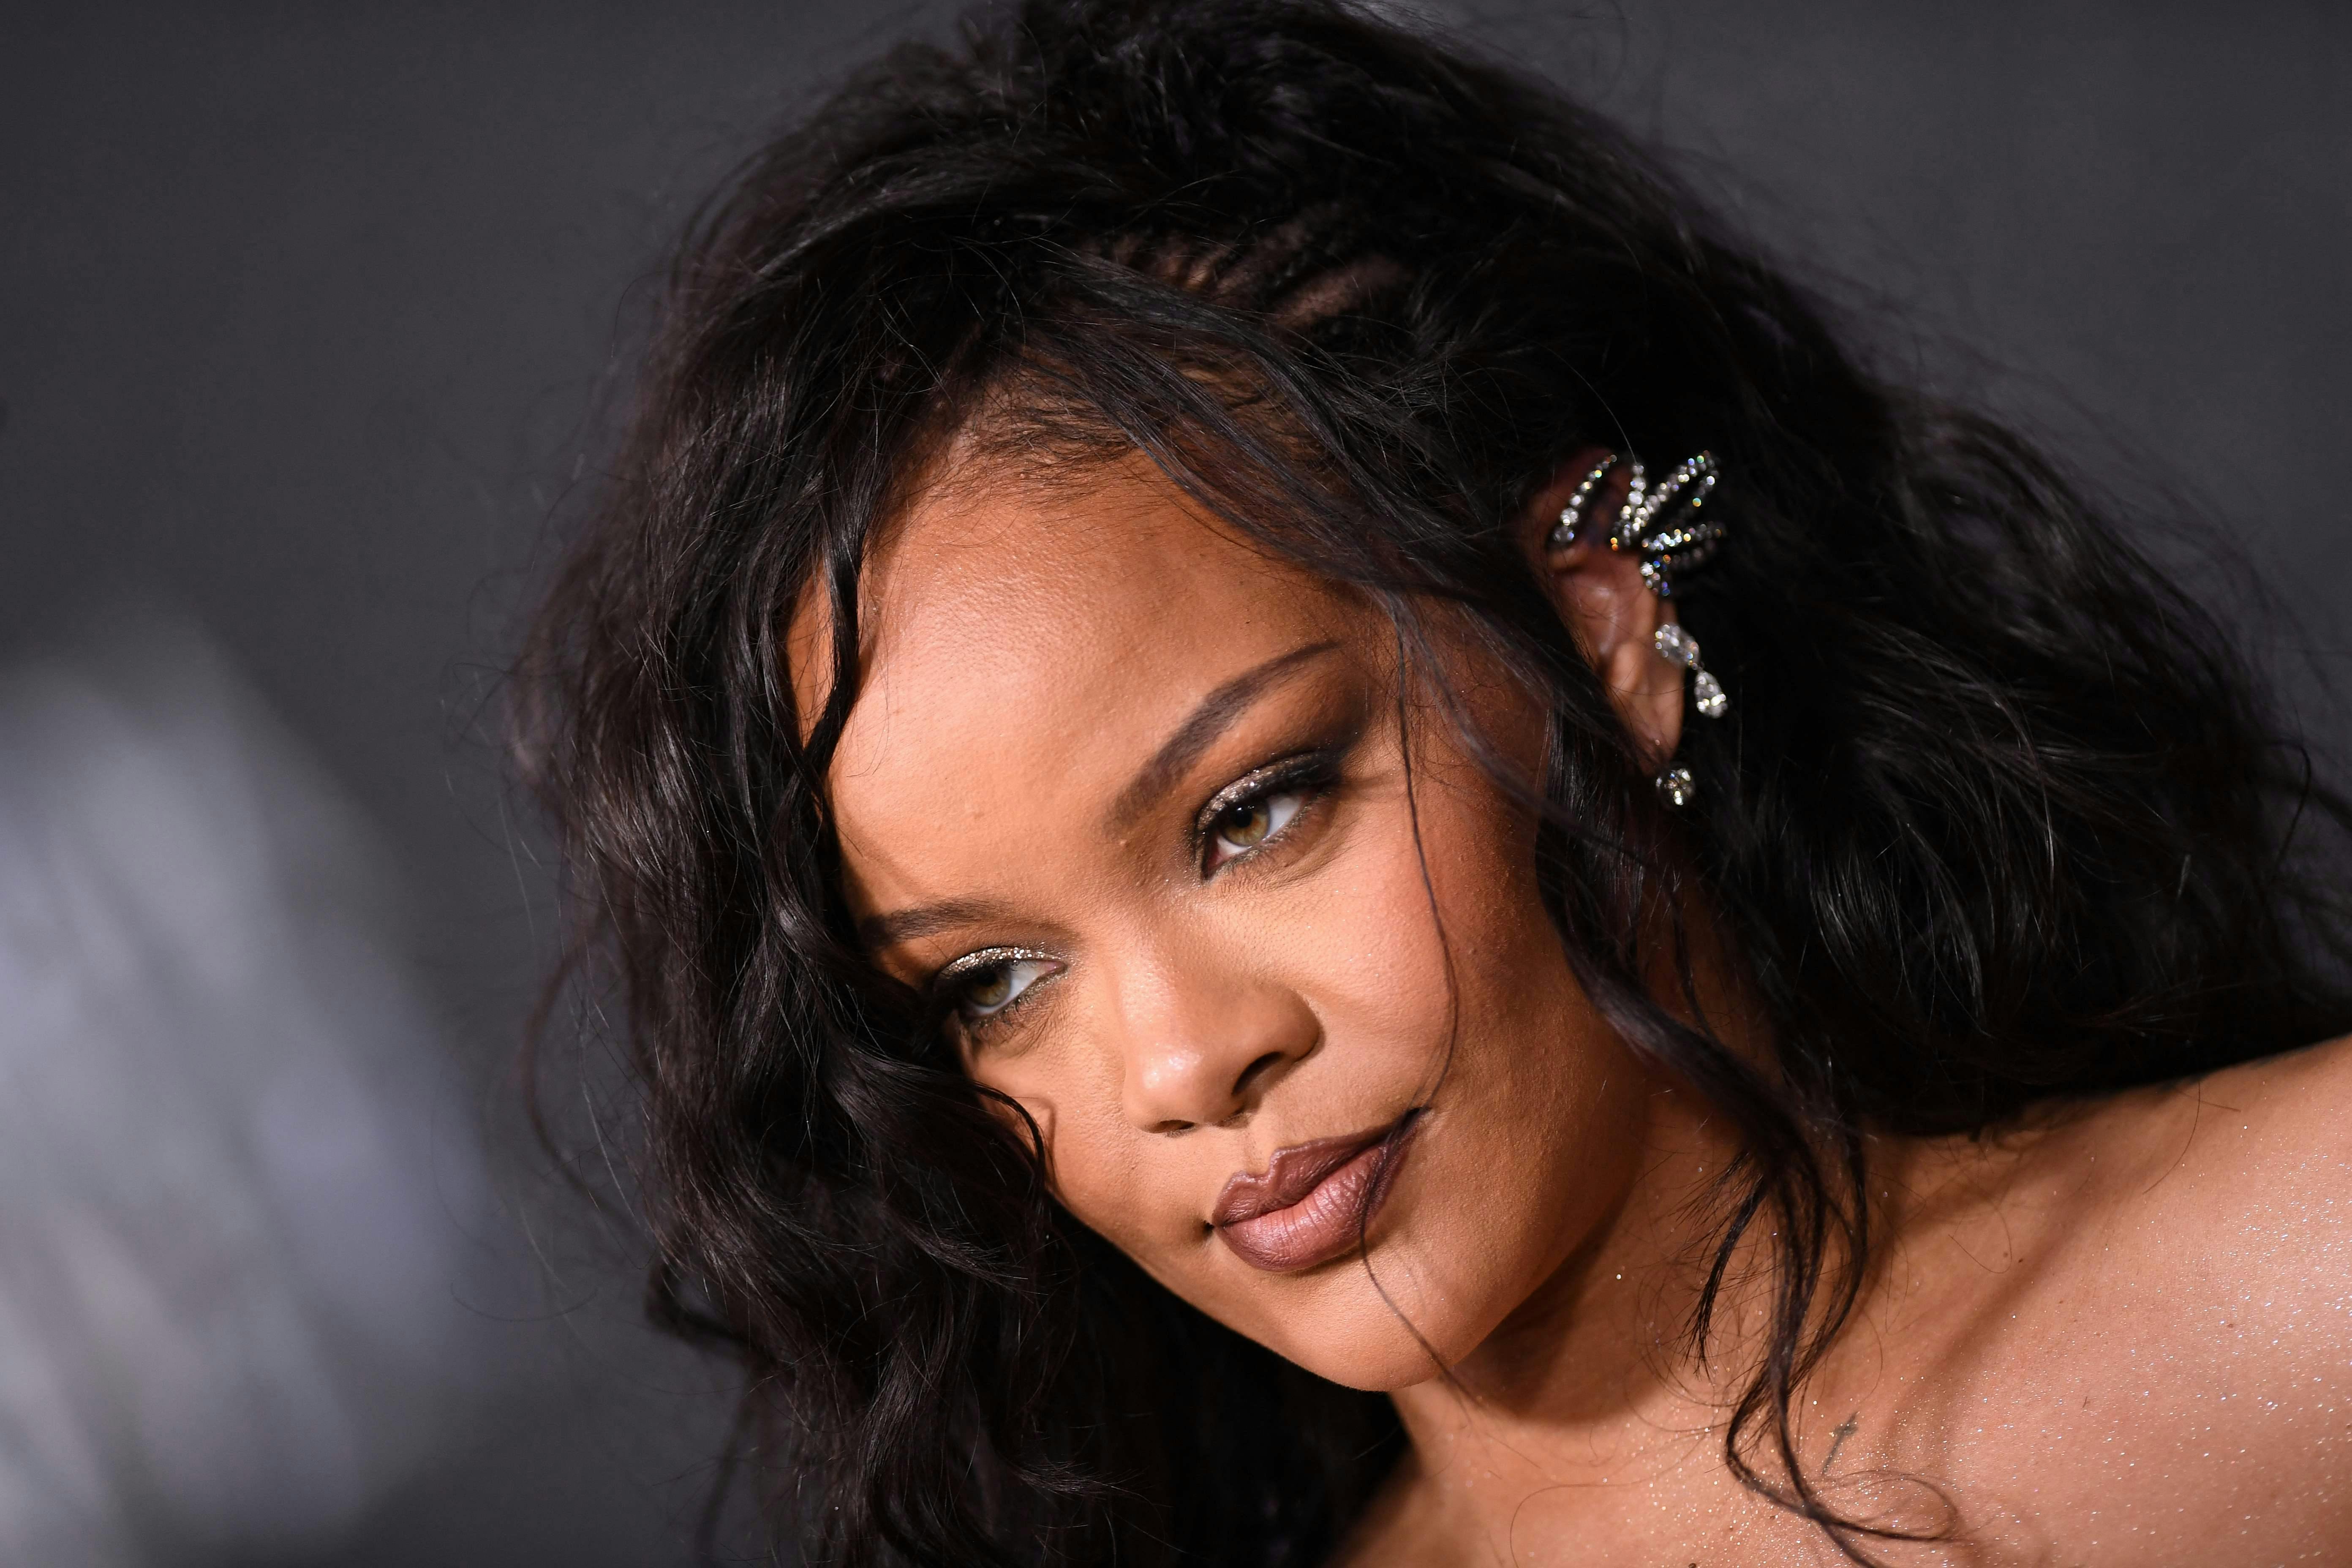 Sangerinden Rihanna viser for første gang sønnen frem.